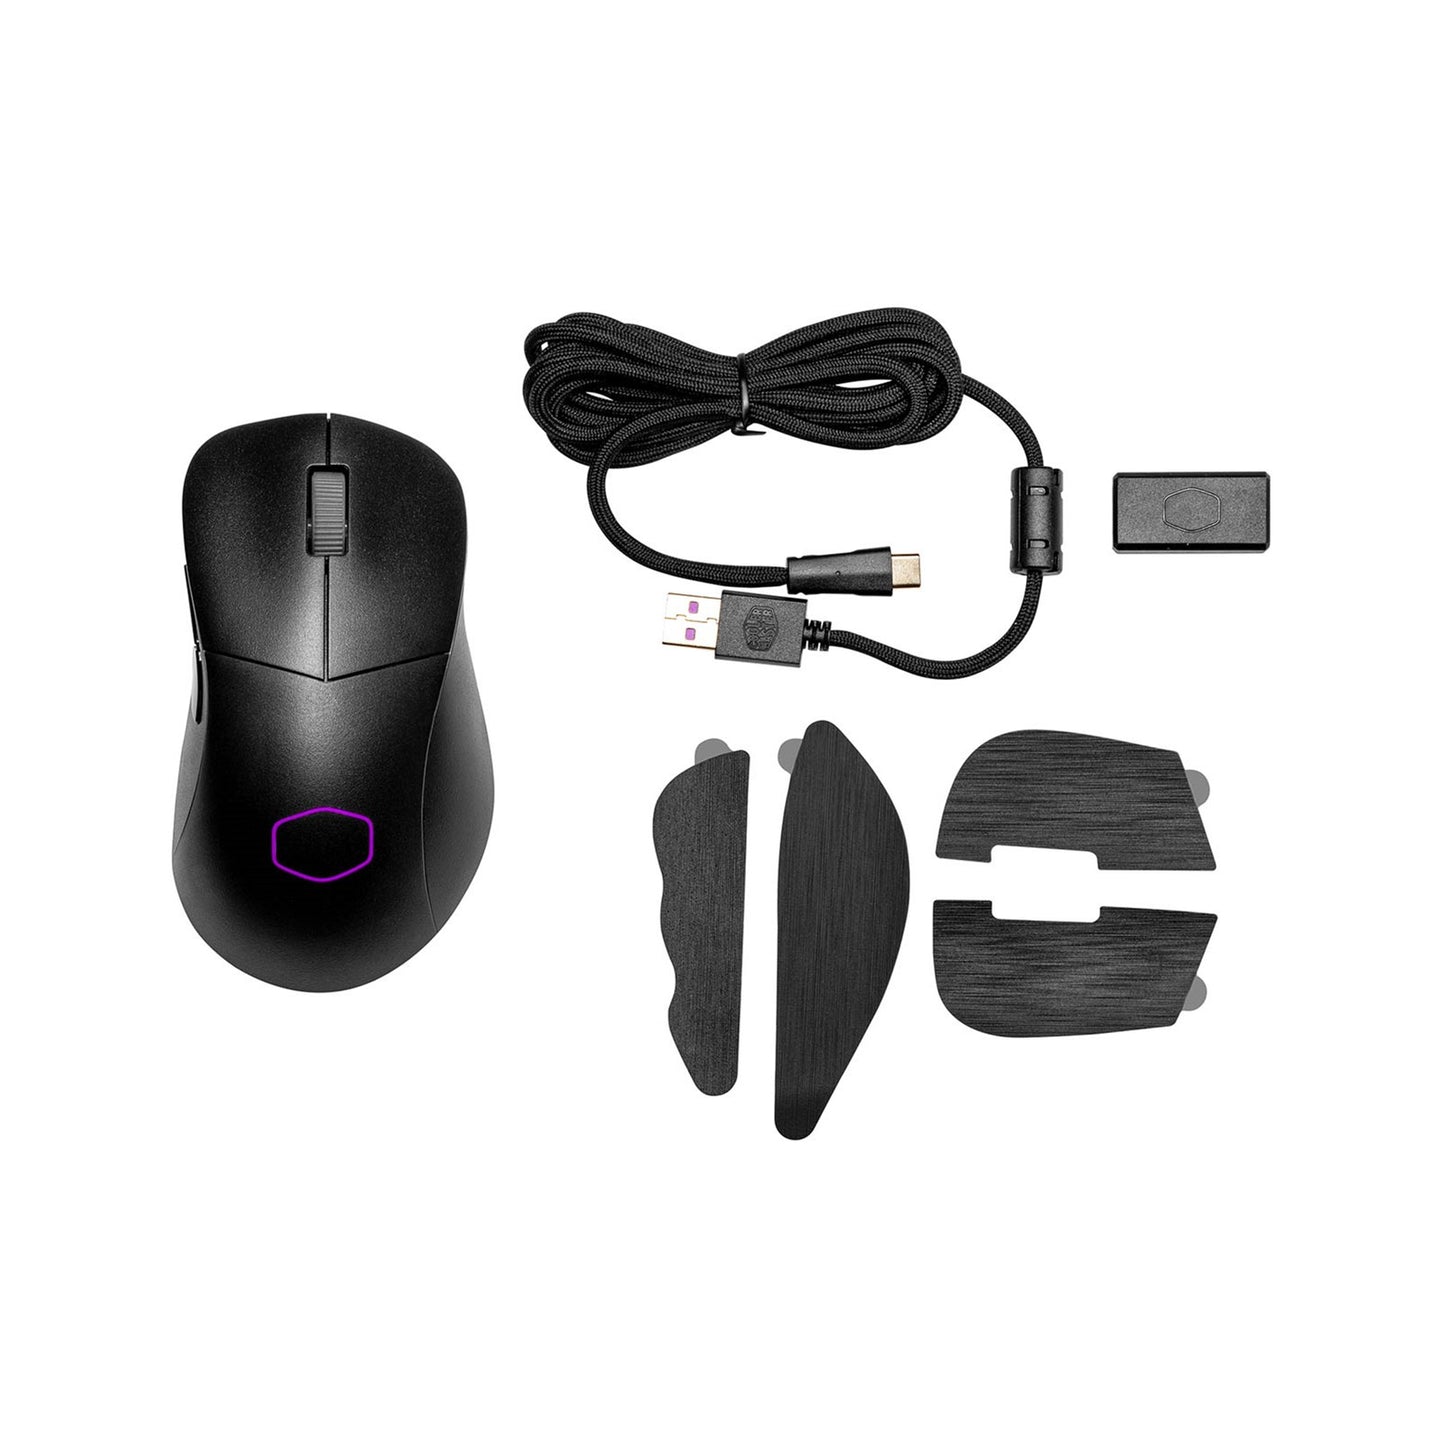 Cooler Master MM731 Wireless RGB Matte Black PC Gaming Mouse